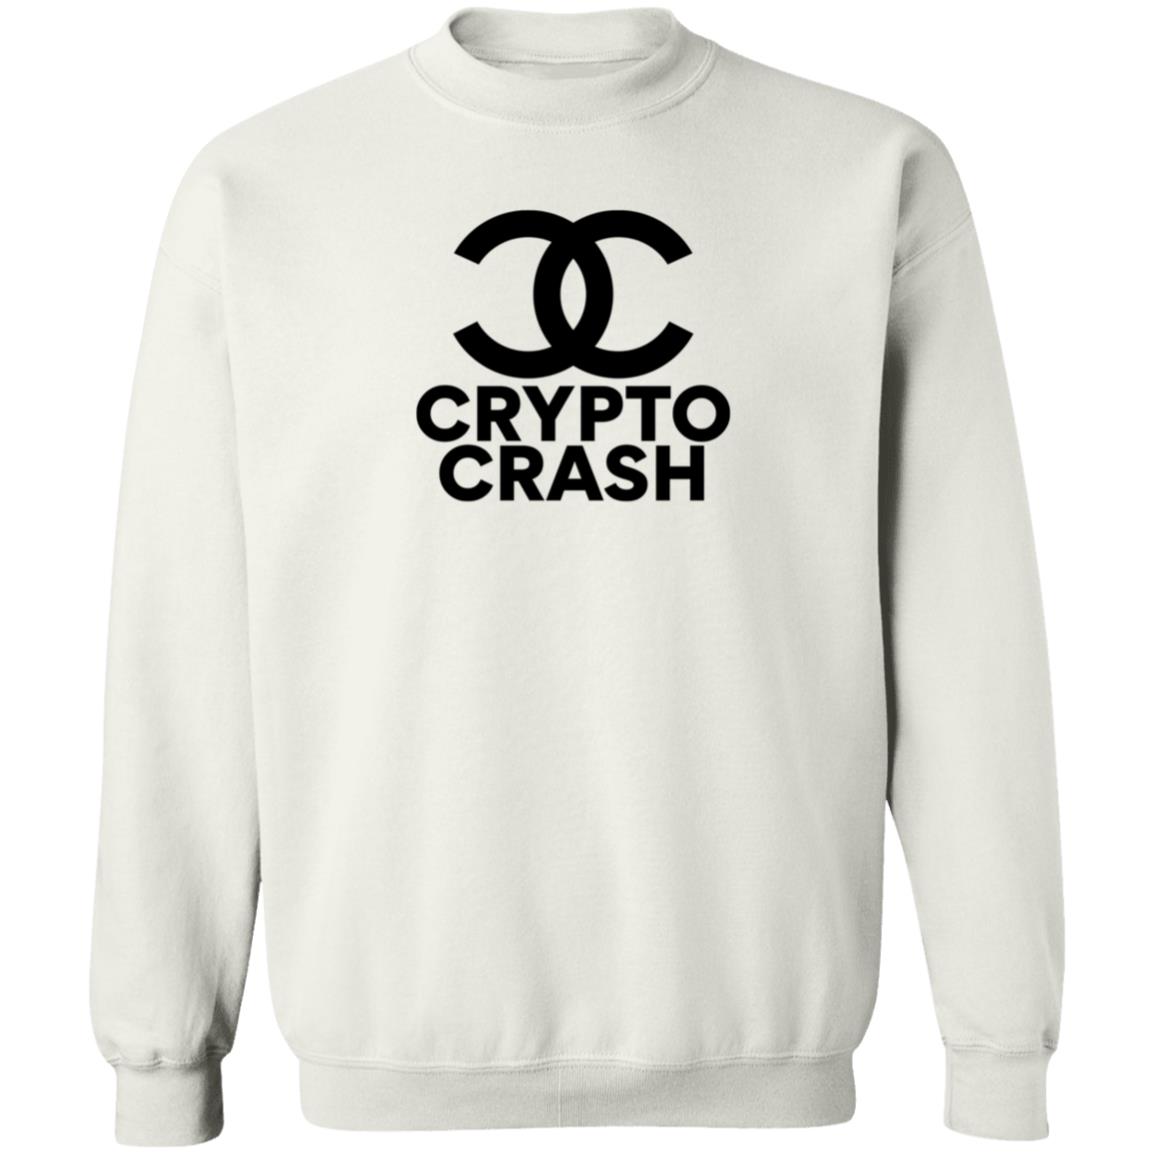 Crypto Crash Shirt 2